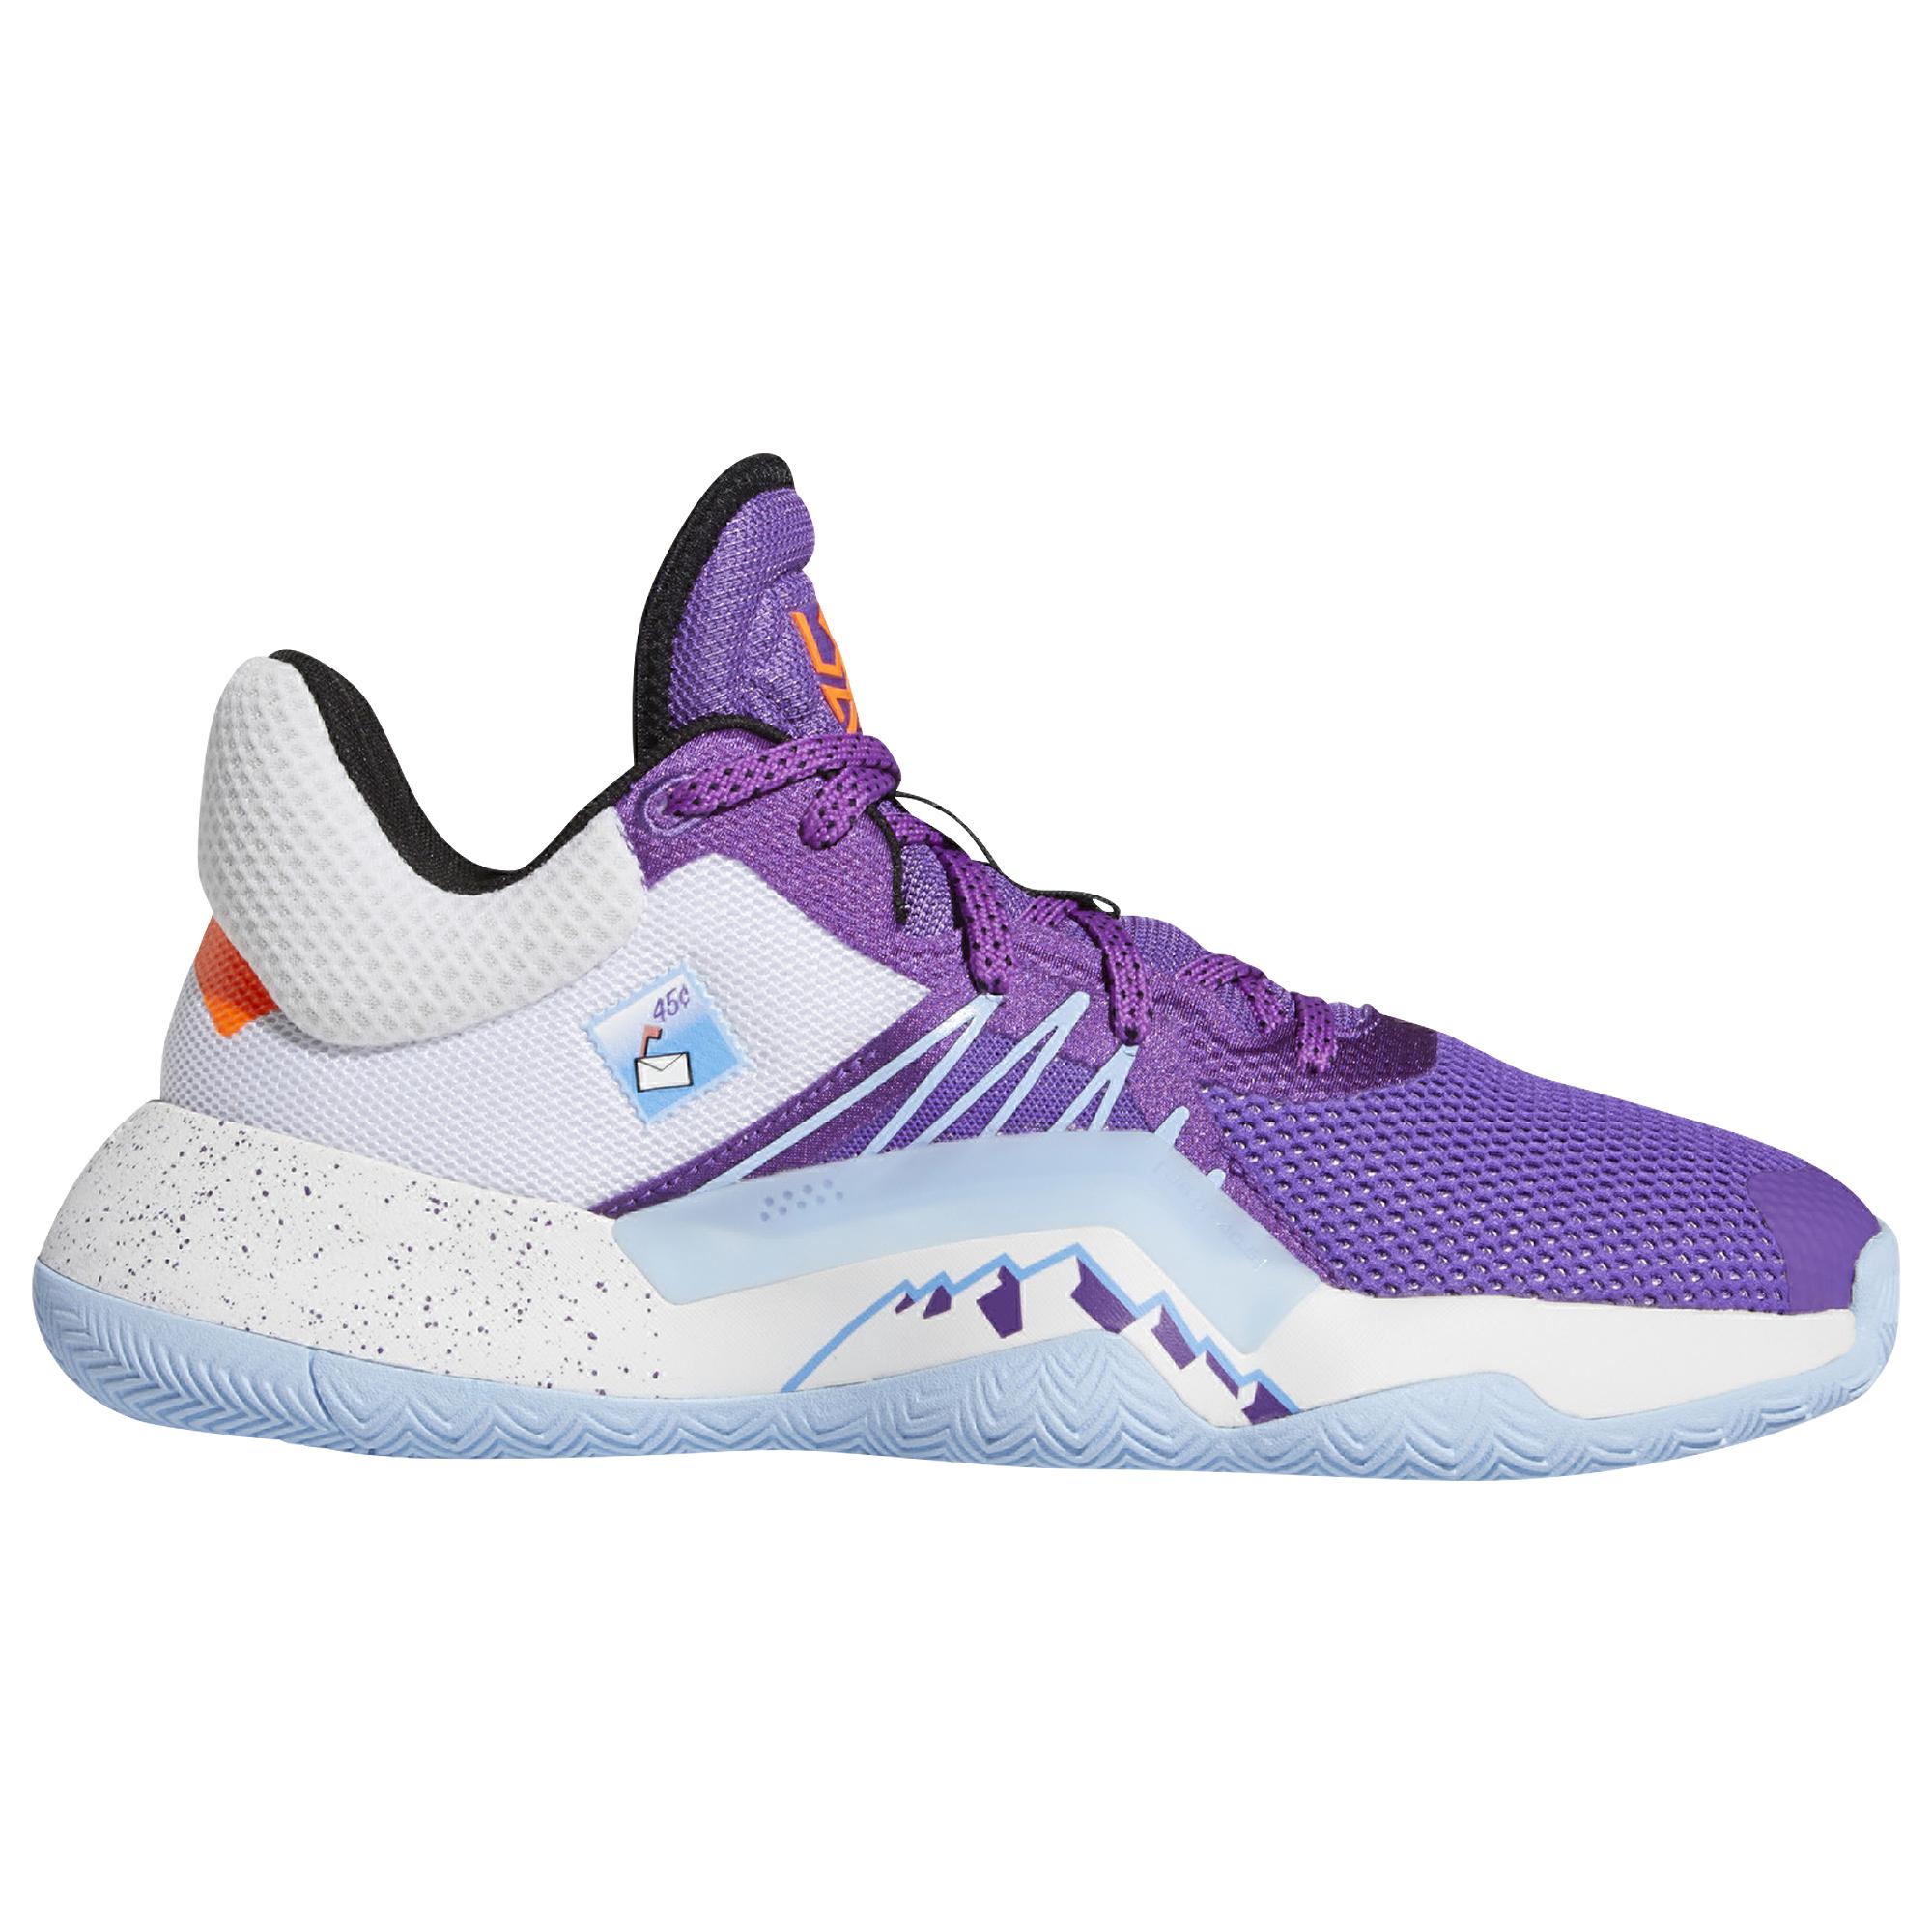 purple adidas basketball shoes